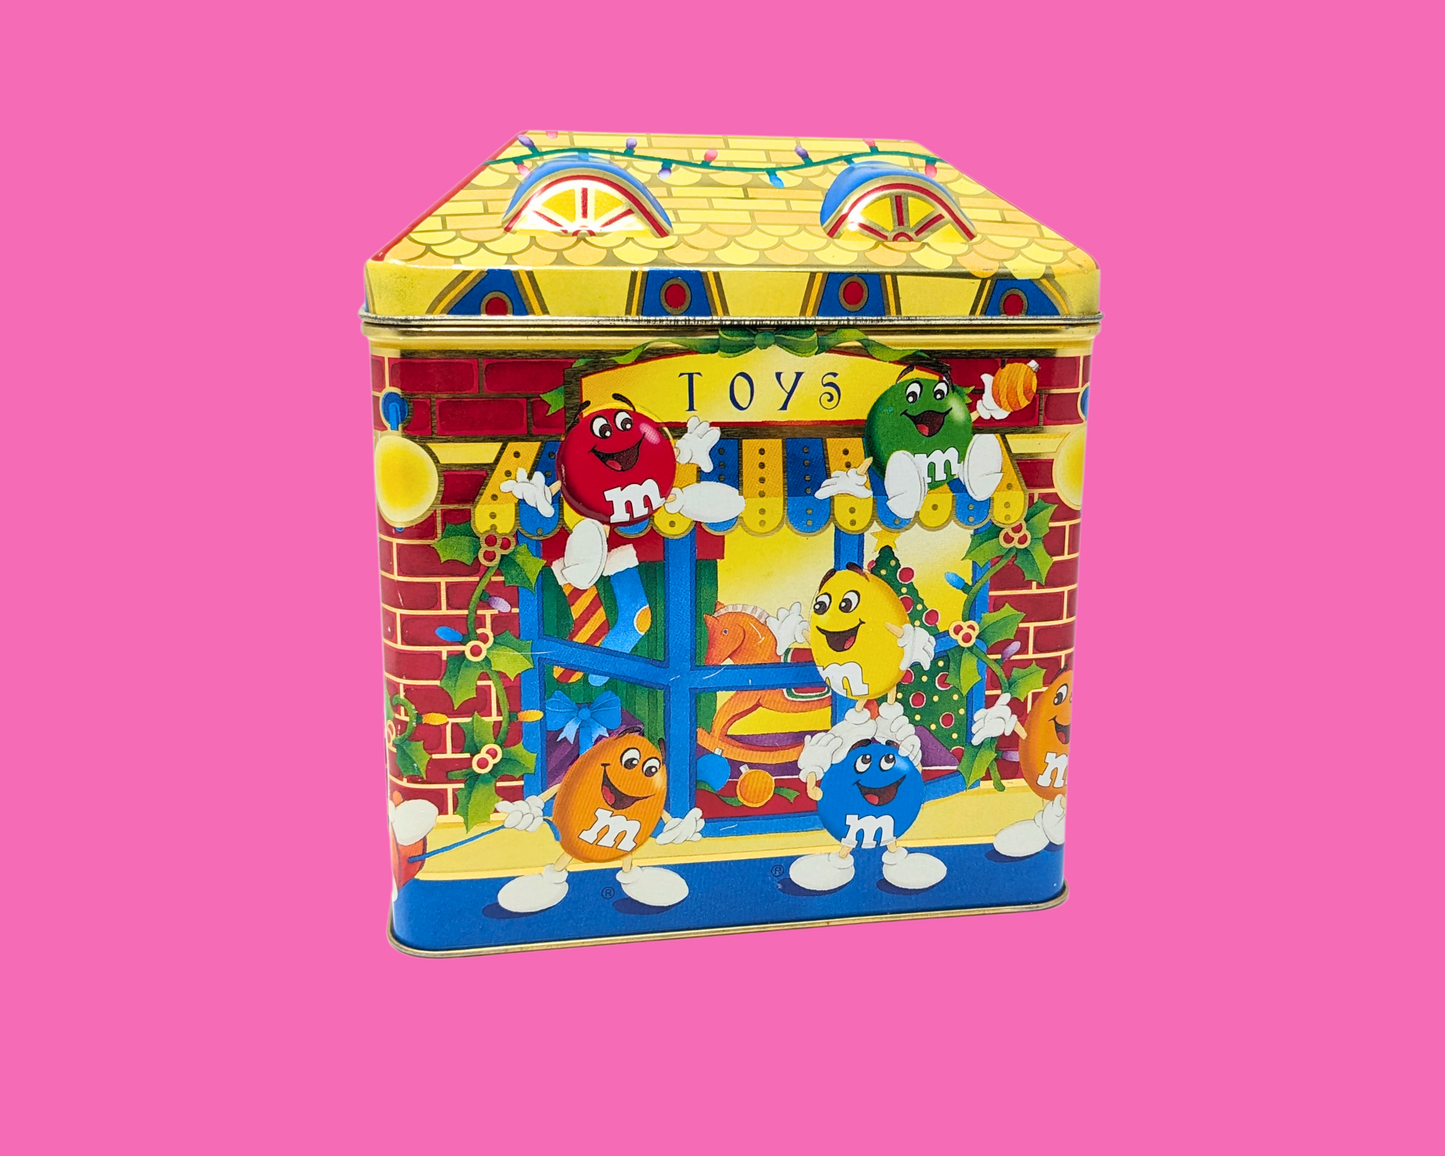 Vintage 1990's M&M Candy Tin Box